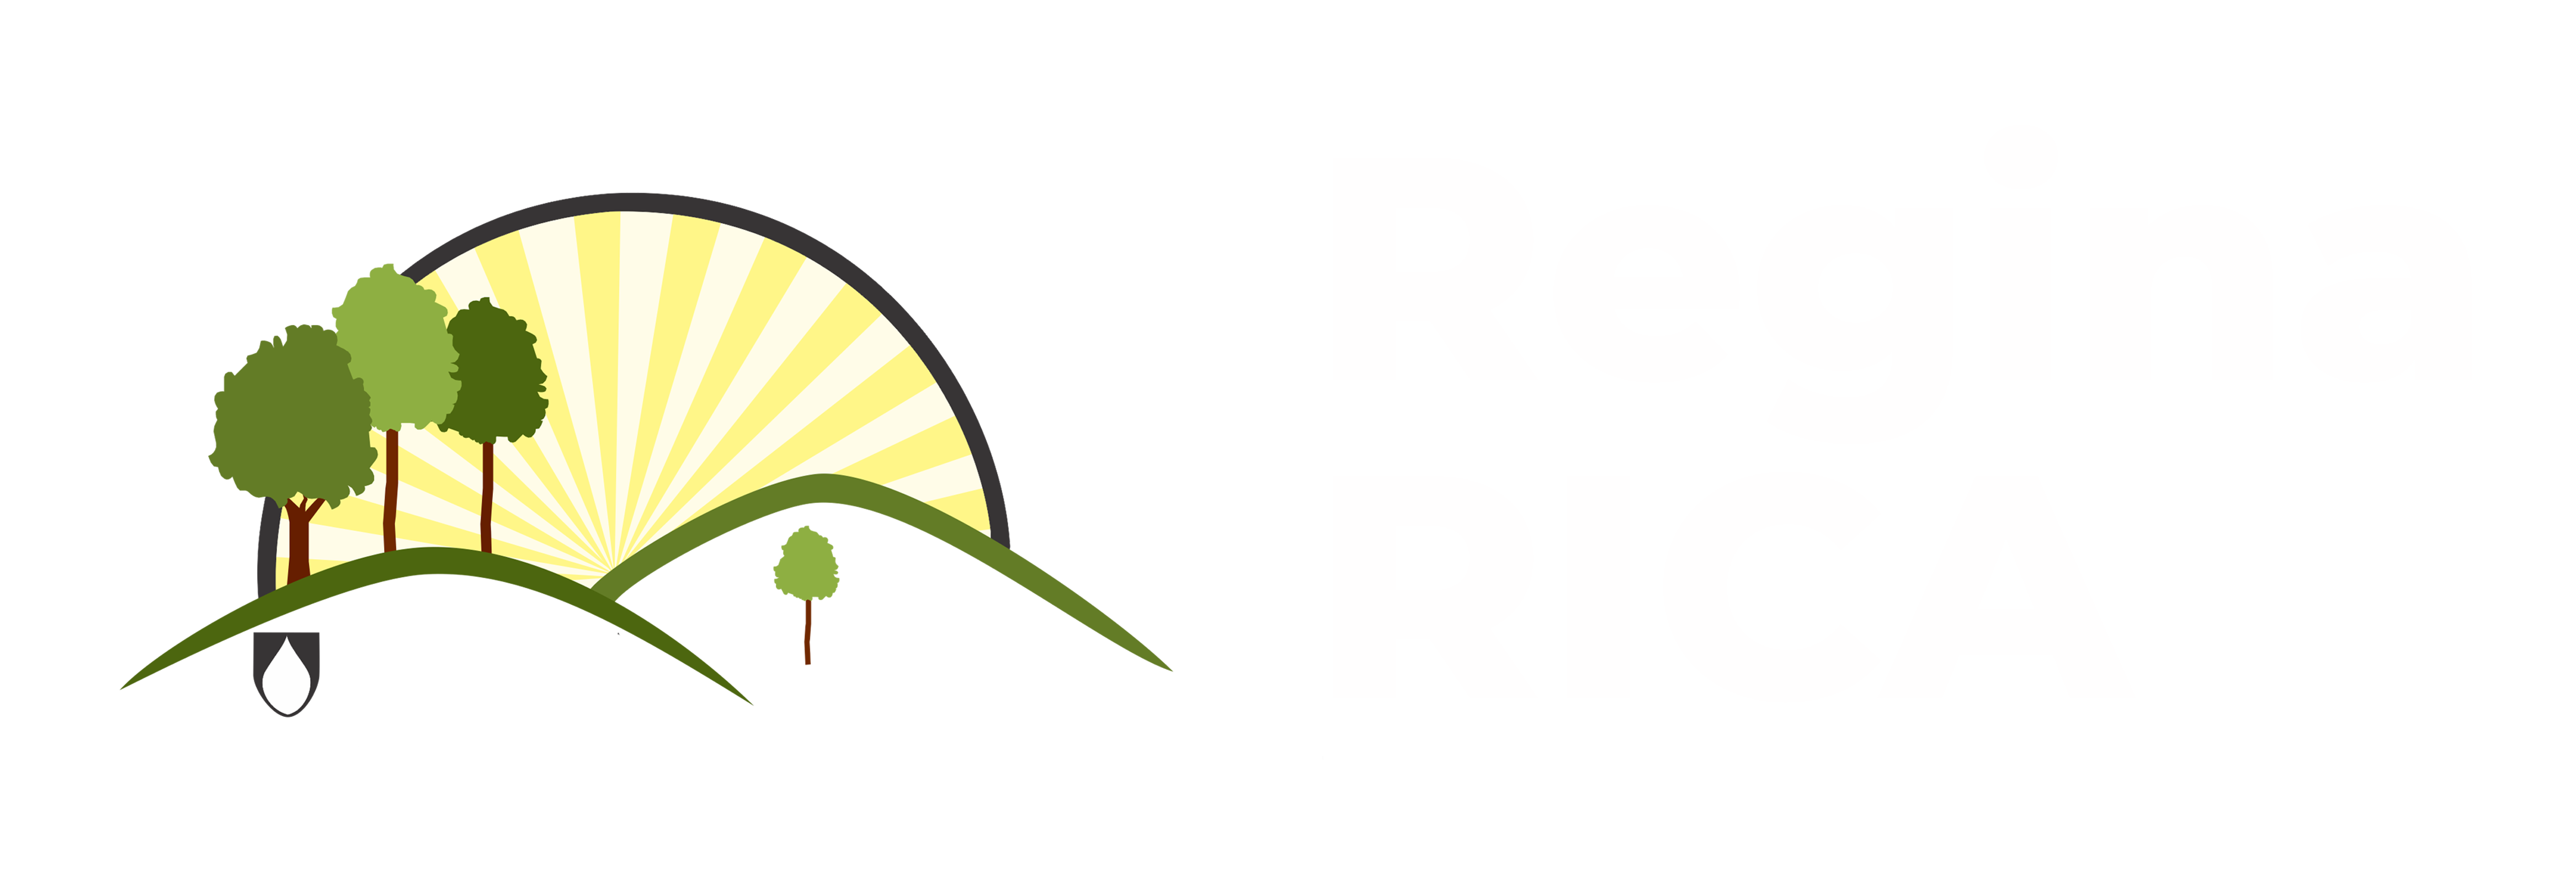 Regina RICA